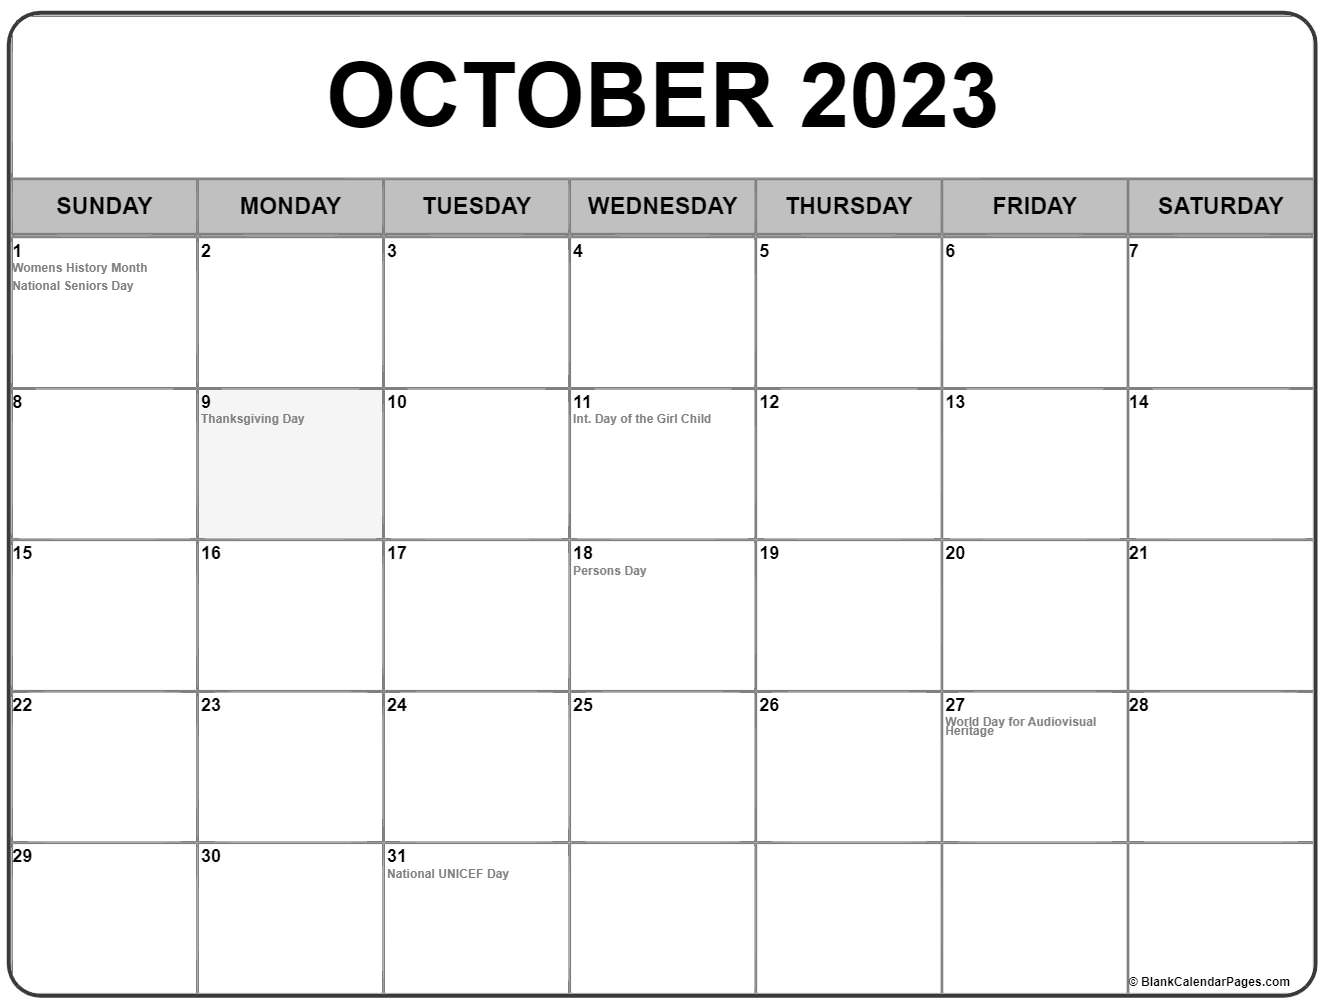 Тв 21 октября 2023. Октябрь 2023 года. Календарь октябрь 2023. Лист календаря октябрь 2023. Oktyabr 2023.